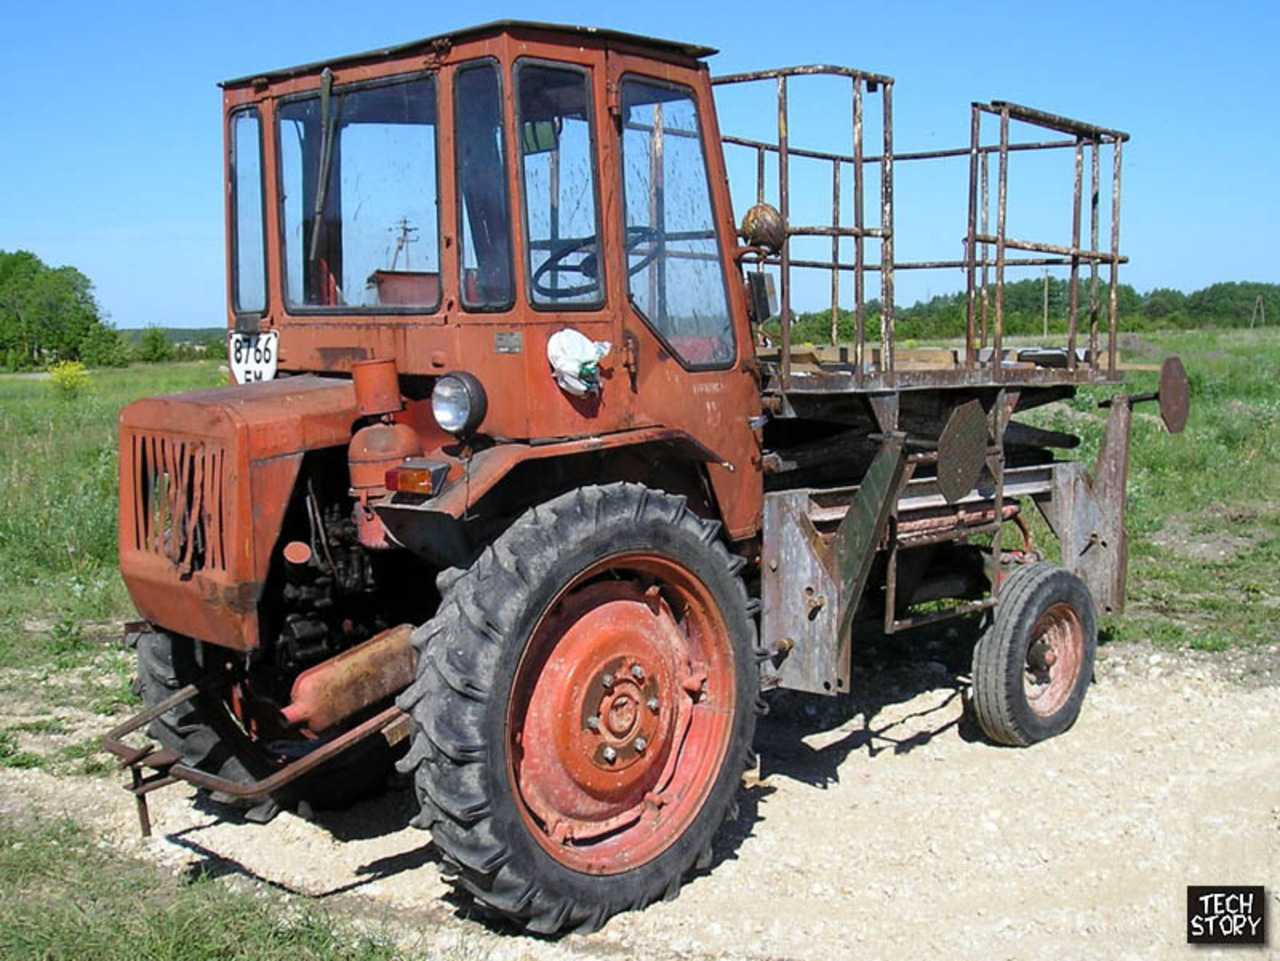 Трактор хтз-17221